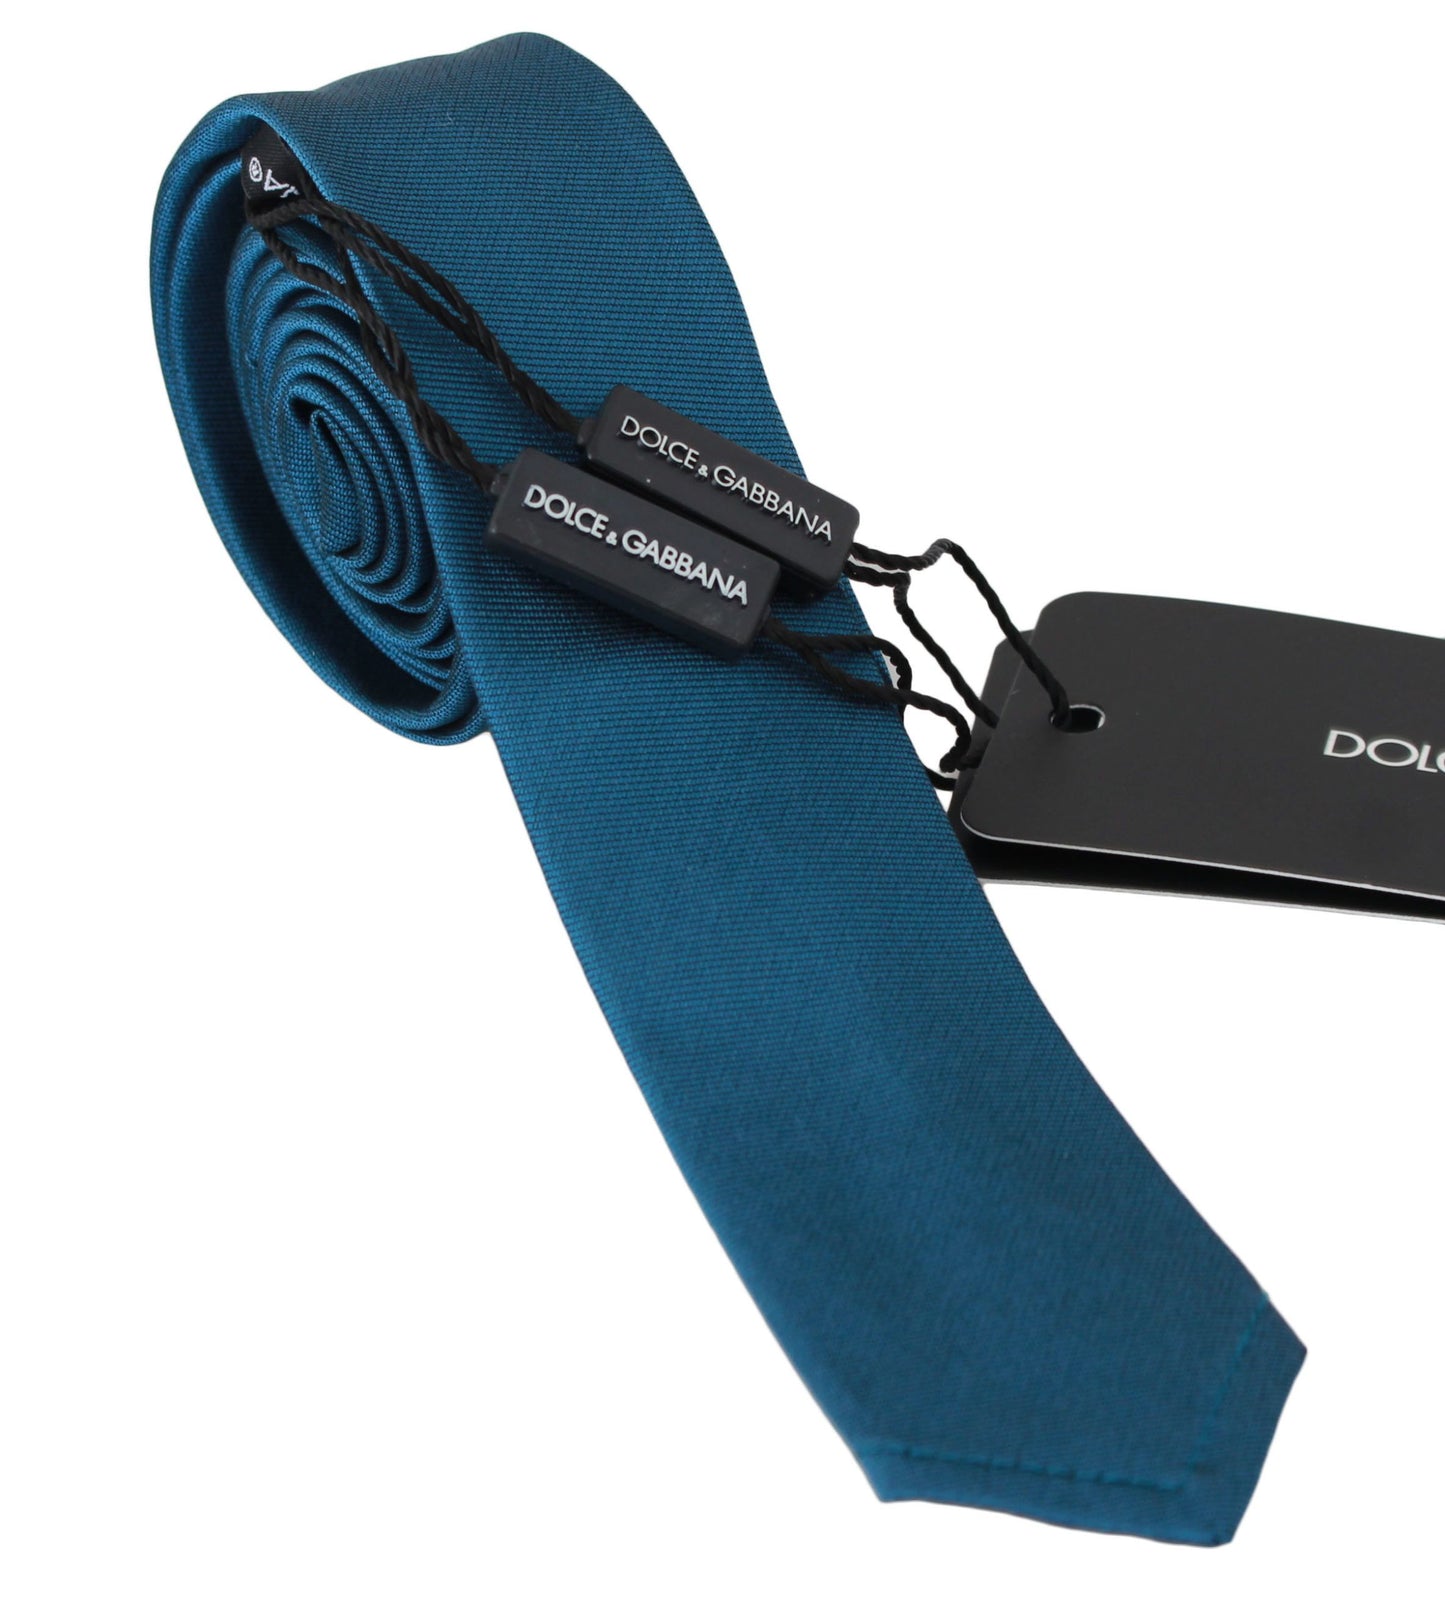 Blue 100% Silk Classic Mens Slim Necktie Tie